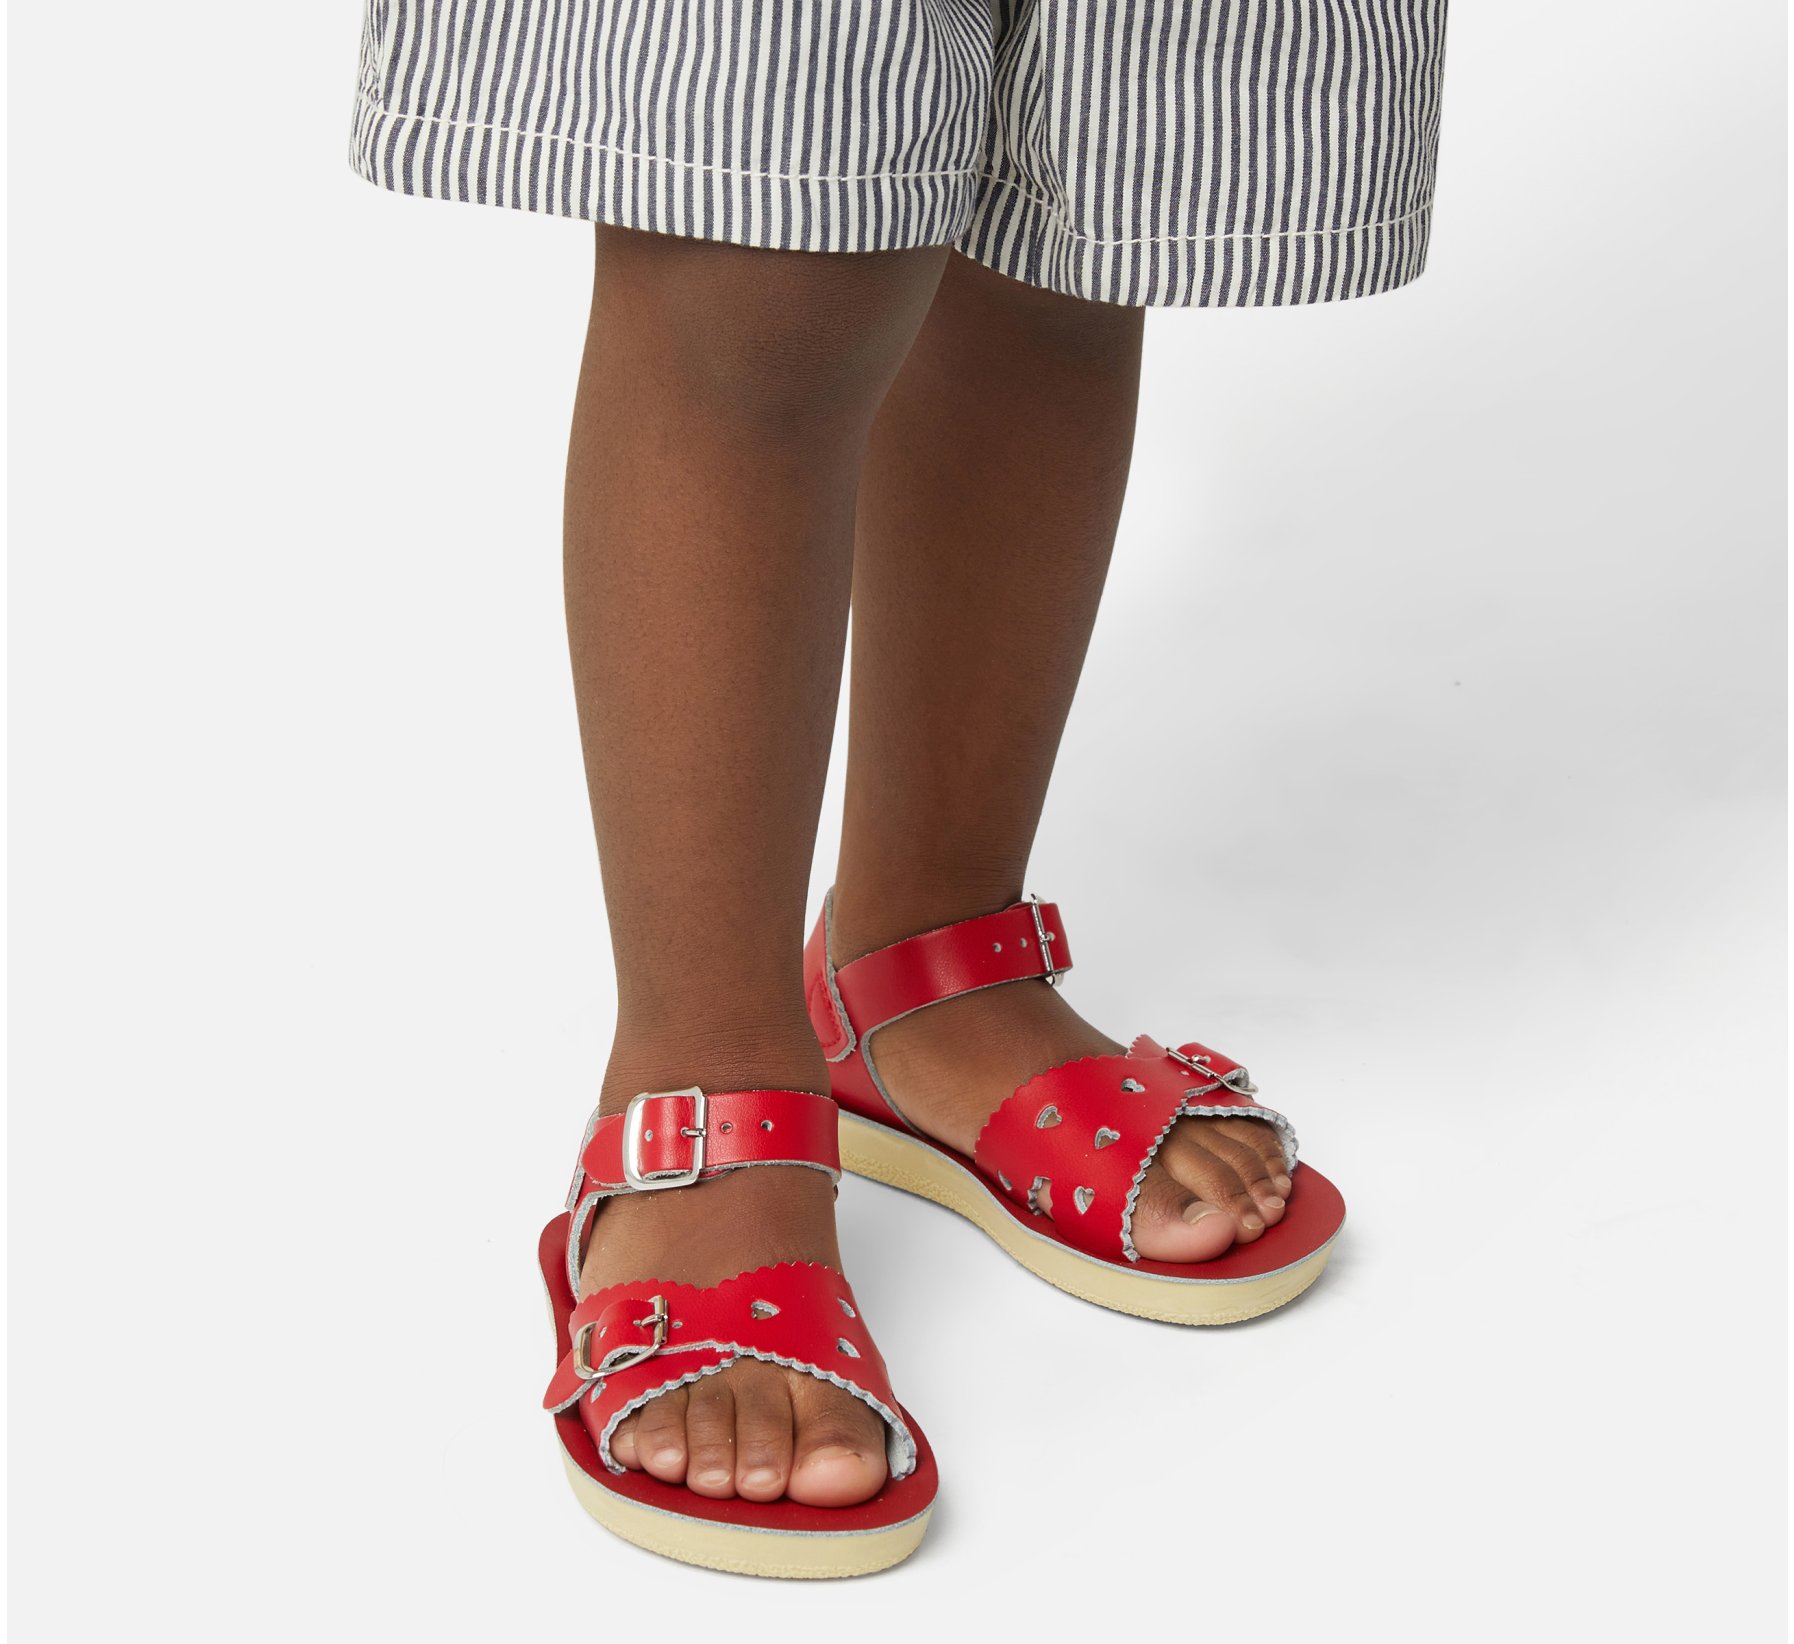 Sweetheart Red Kids Sandals - Salt Water Sandals